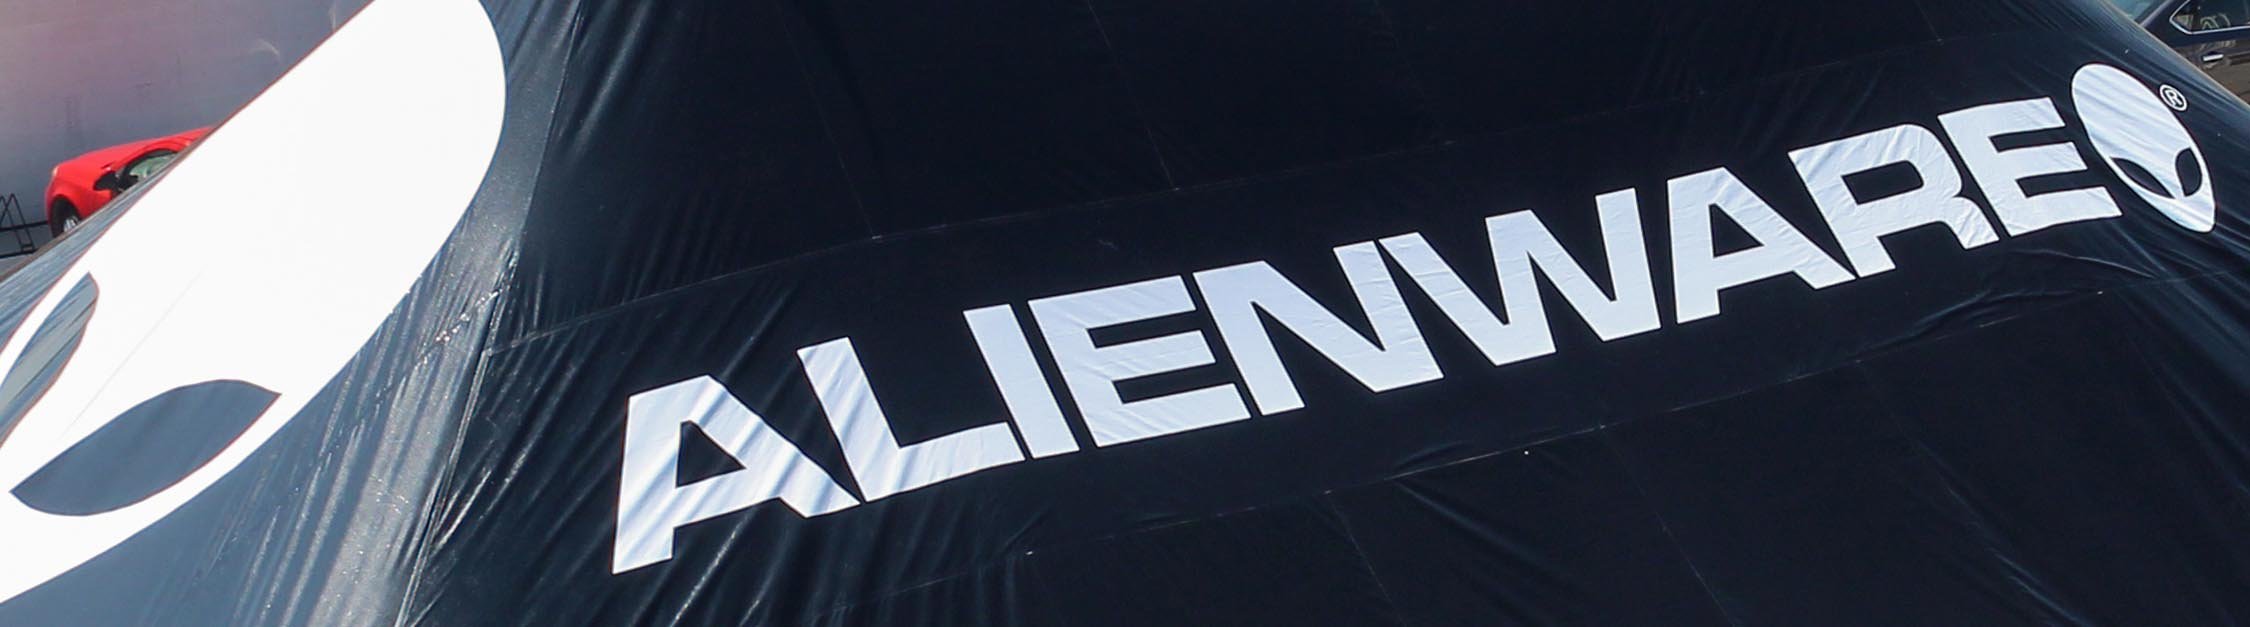 Alienware-high-peak-tent.jpg